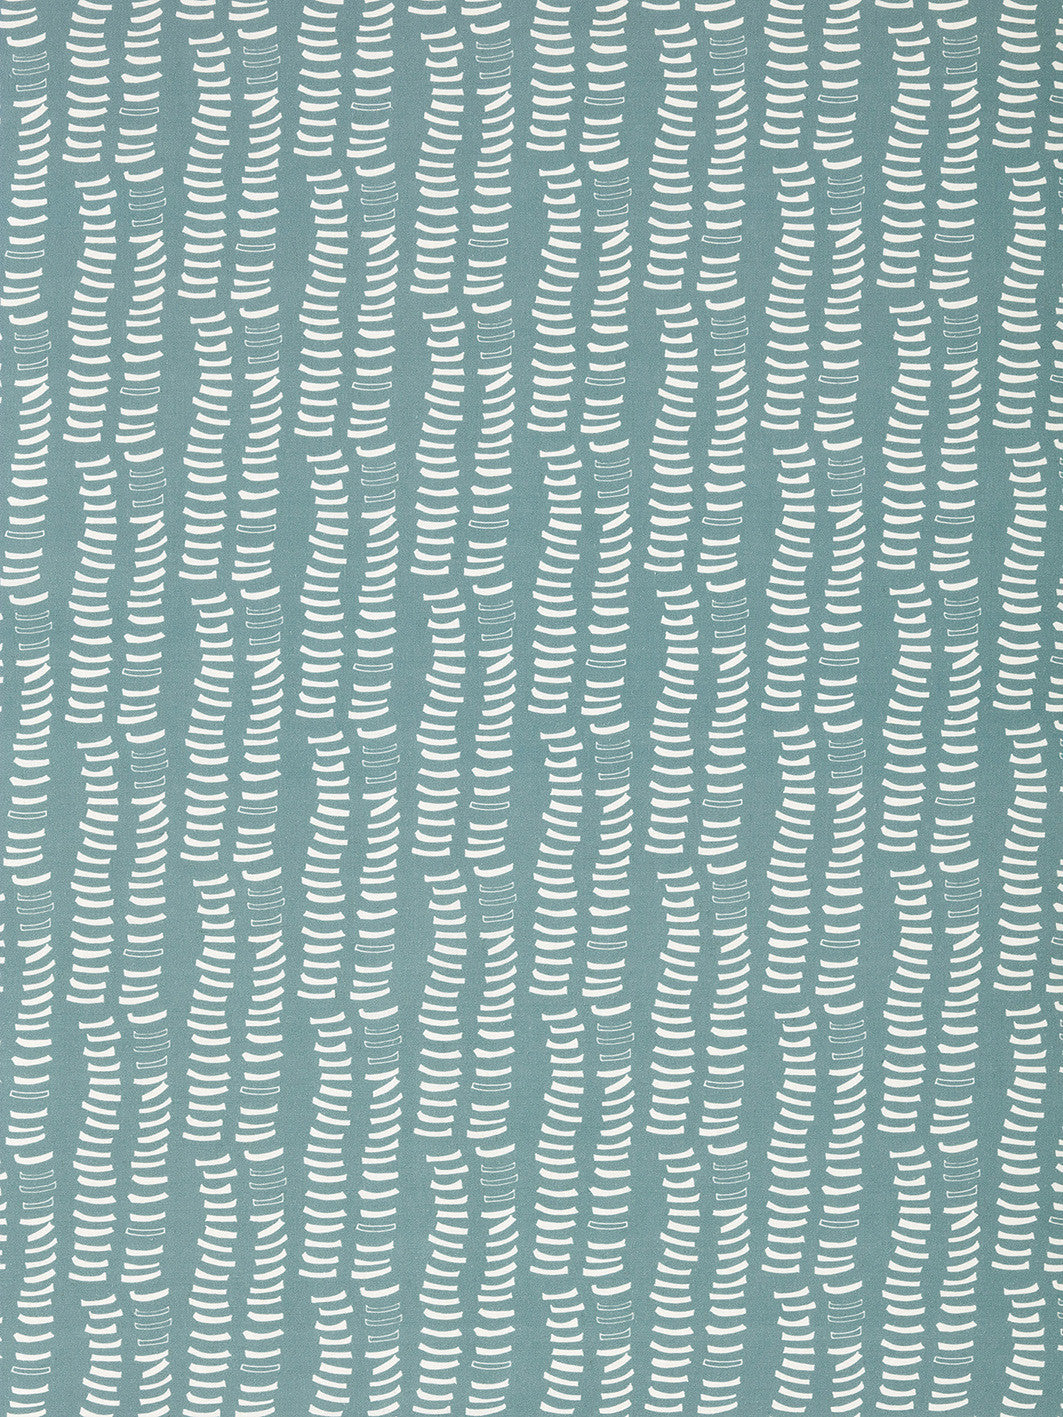 Graphic Rib Pattern Linen Cotton Fabric Olive Green